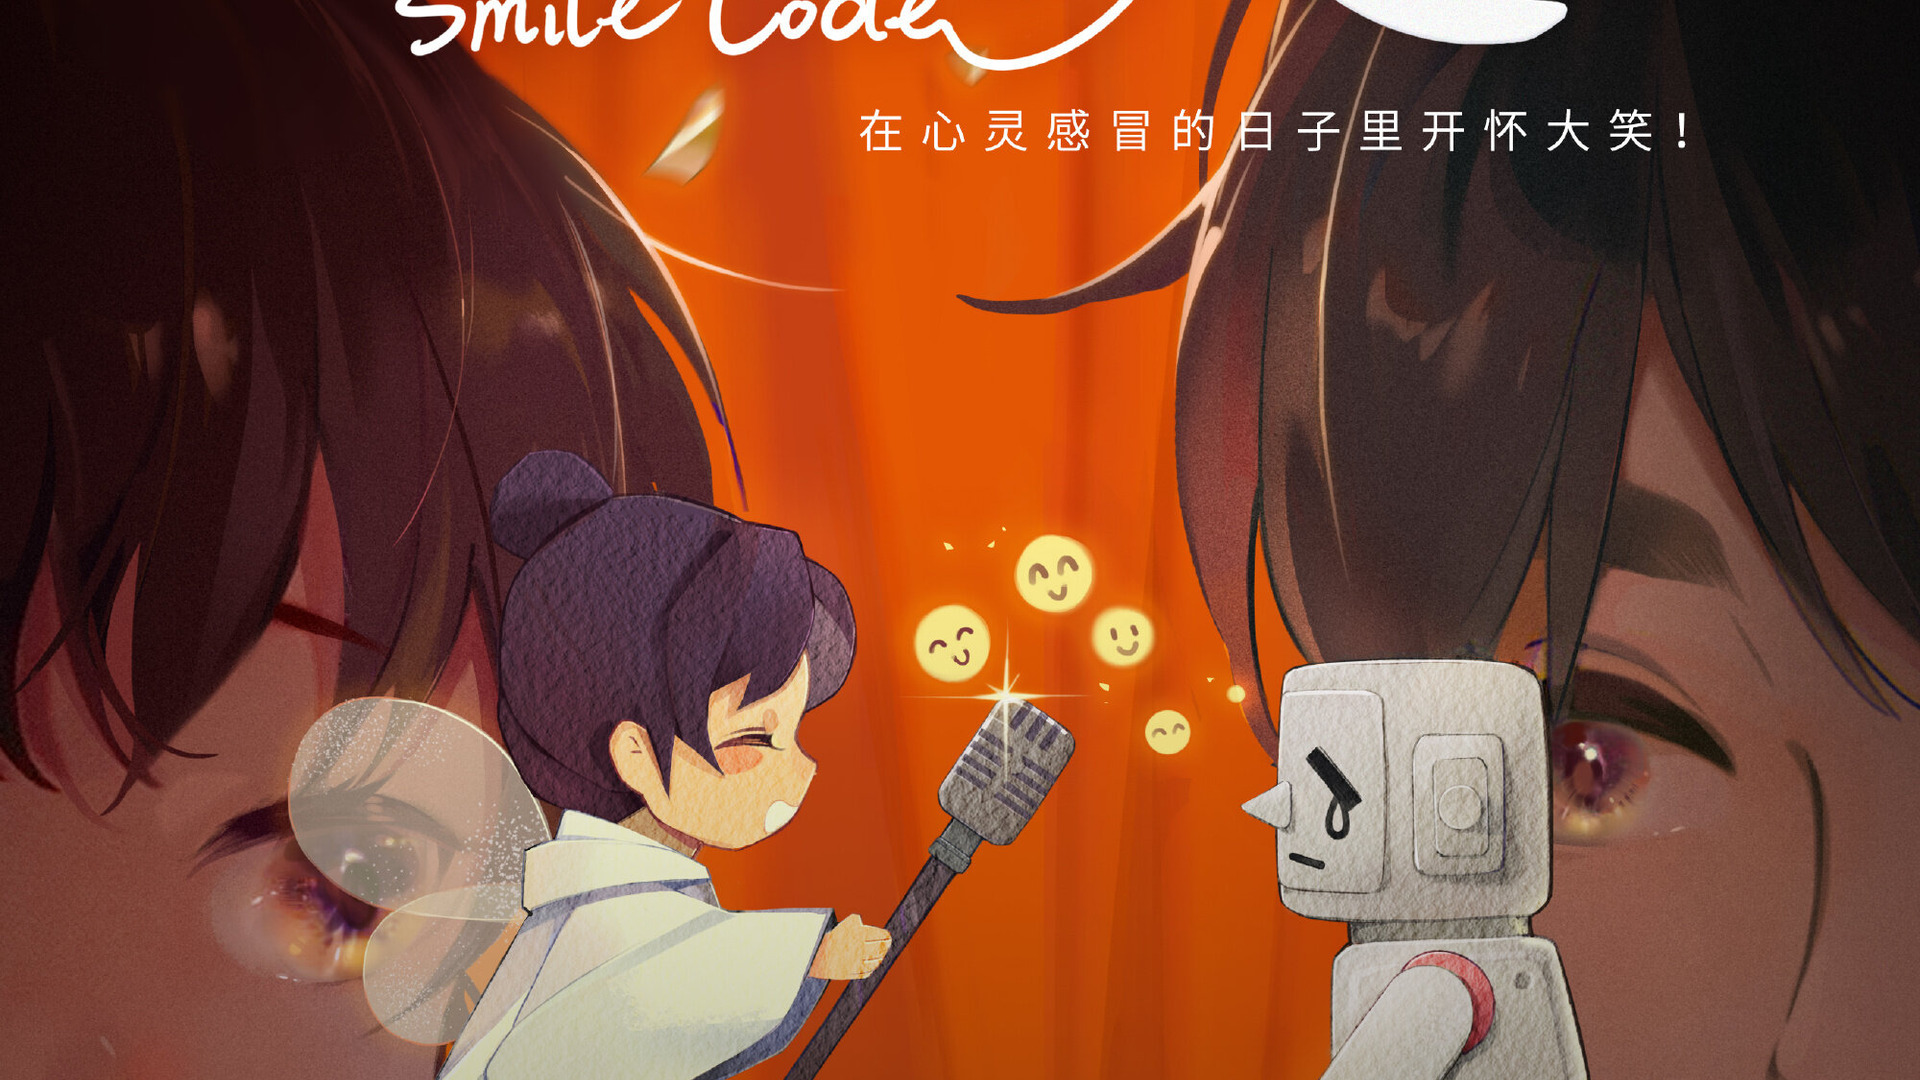 Show Smile Code